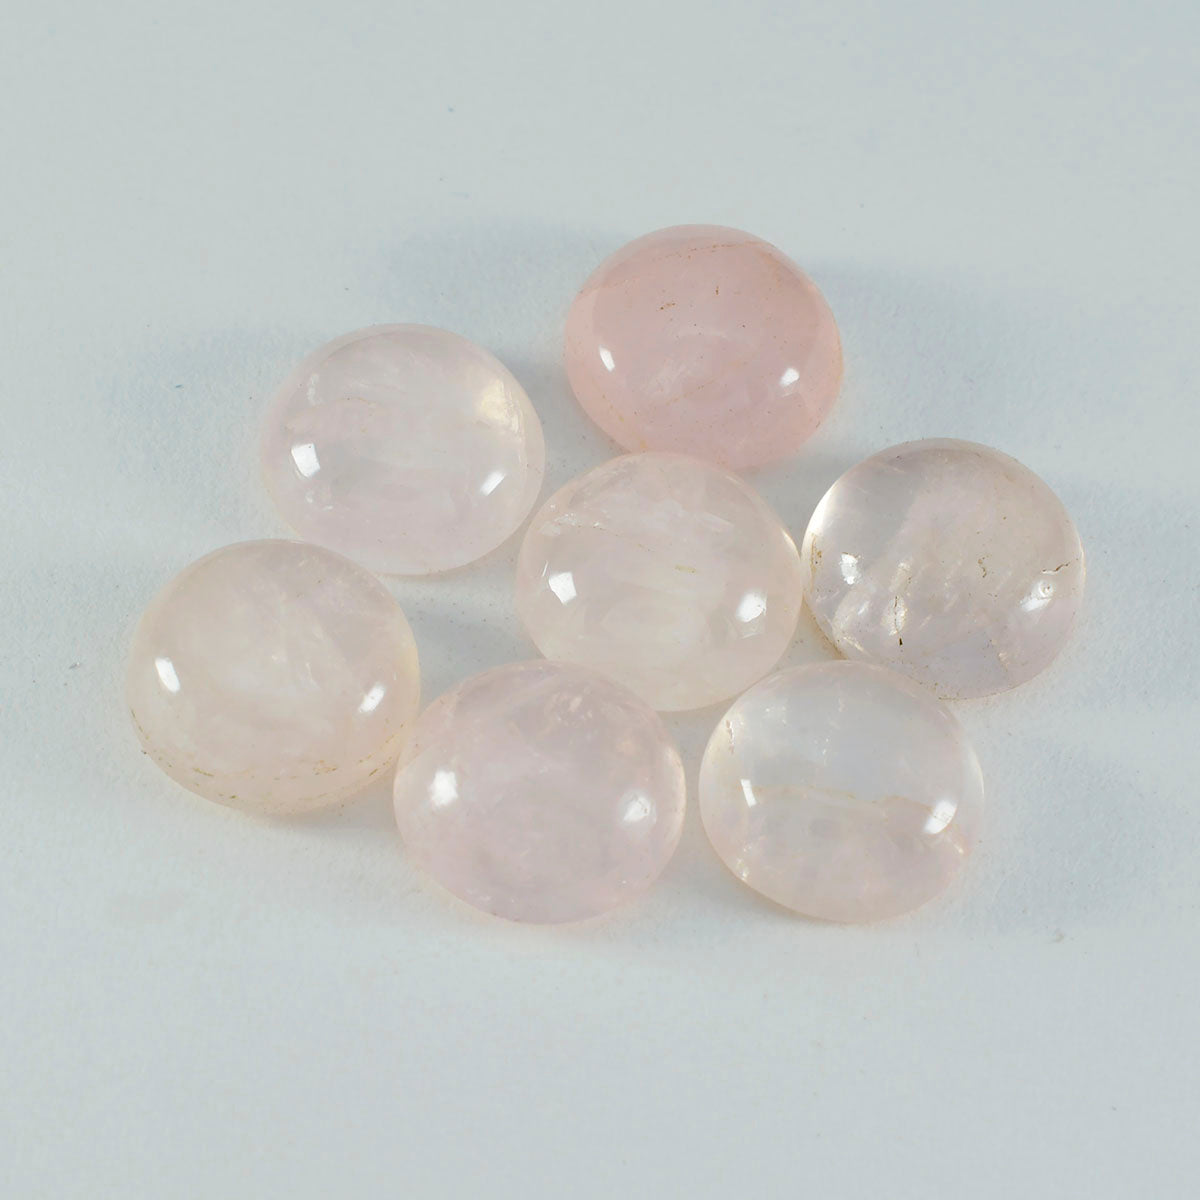 Riyogems 1PC Pink Rose Quartz Cabochon 14x14 mm Round Shape nice-looking Quality Loose Gems